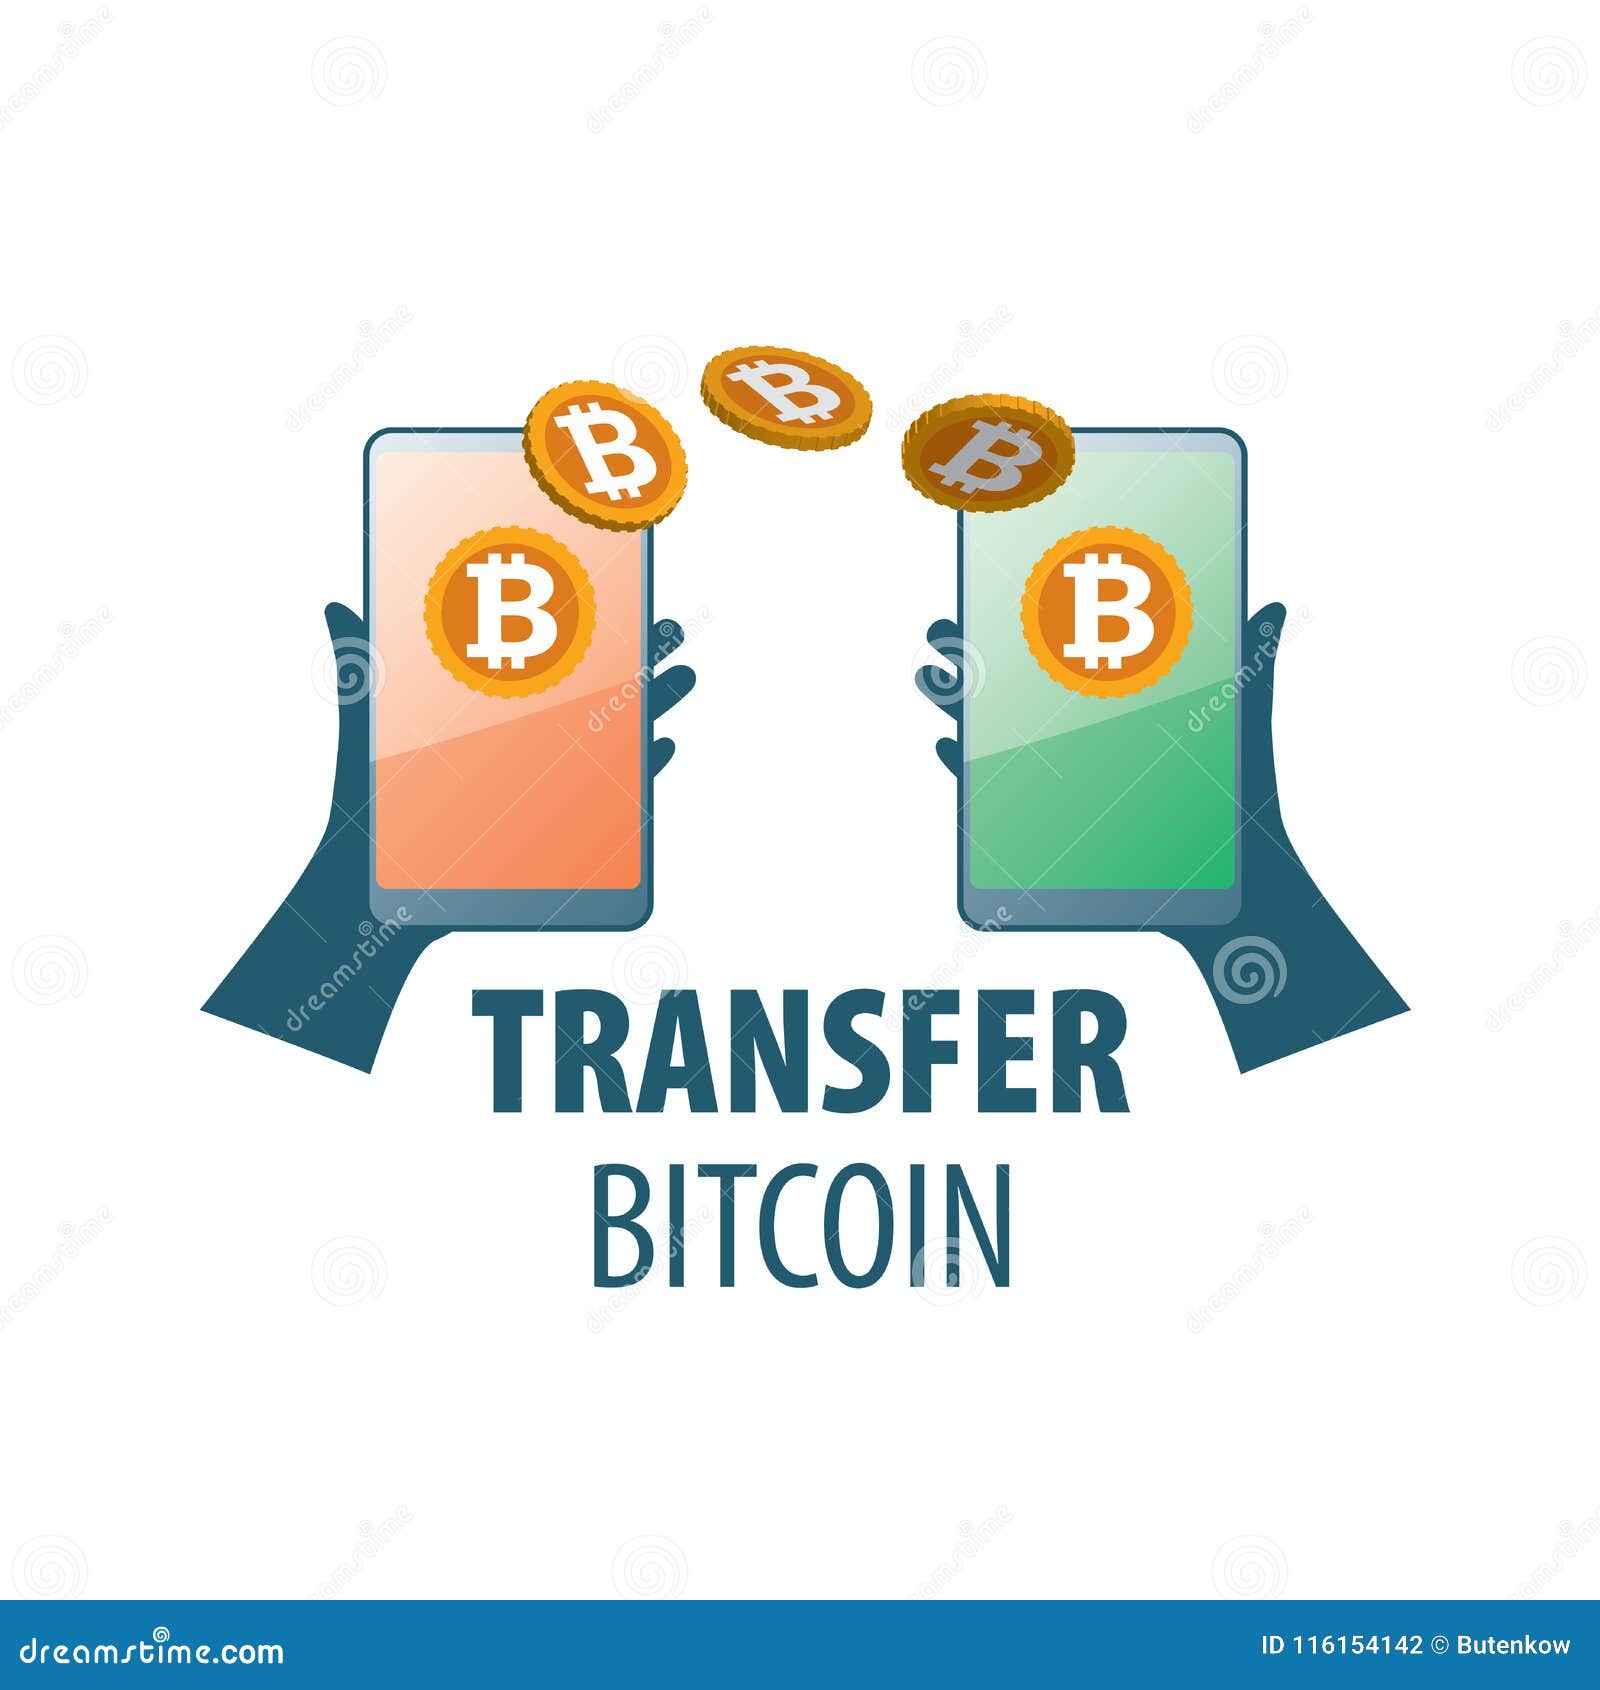 Bitcoin transfer time